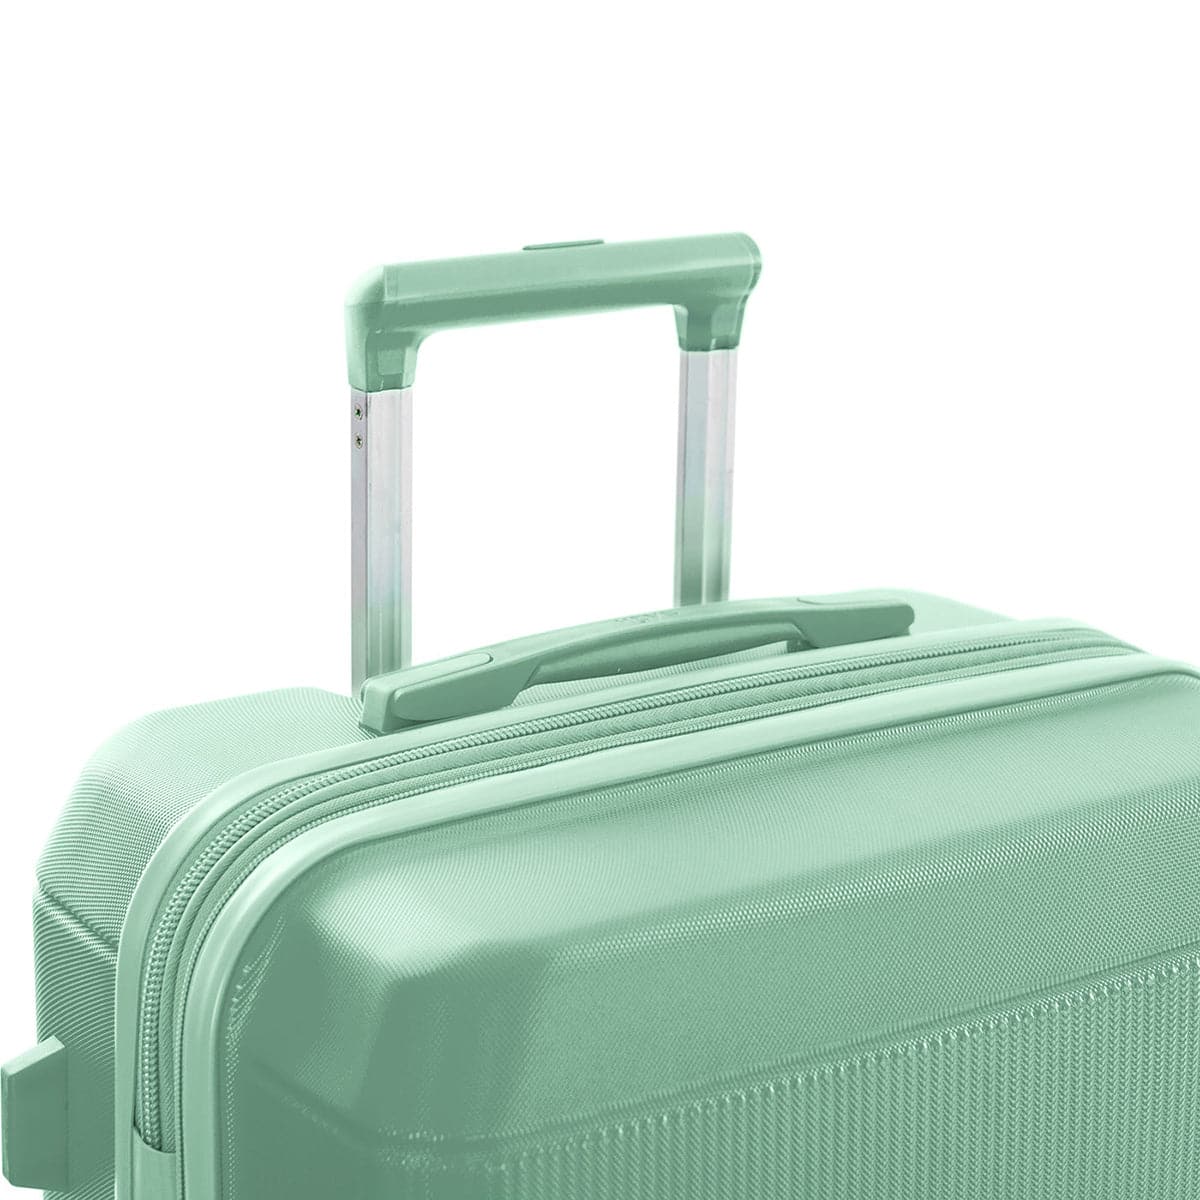 Heys Neo 3 Piece Spinner Luggage Set